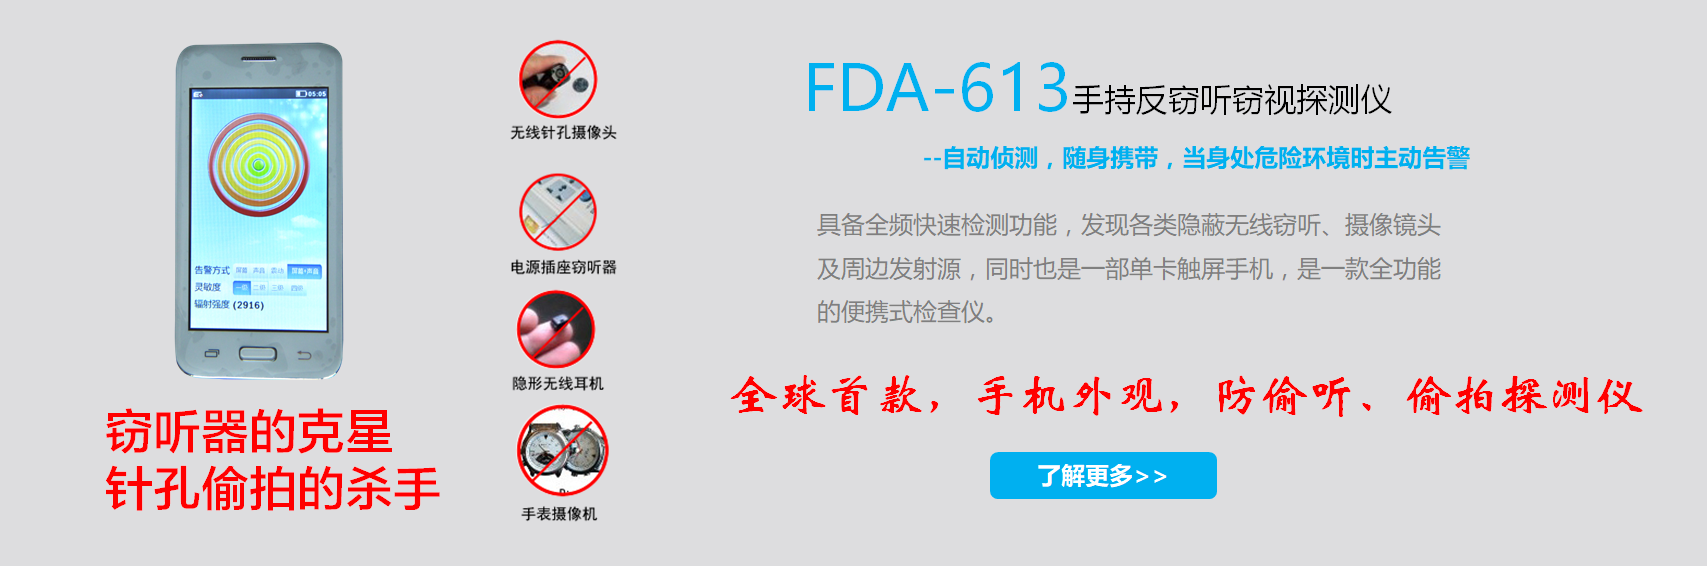 FDA-613全频侦搜仪